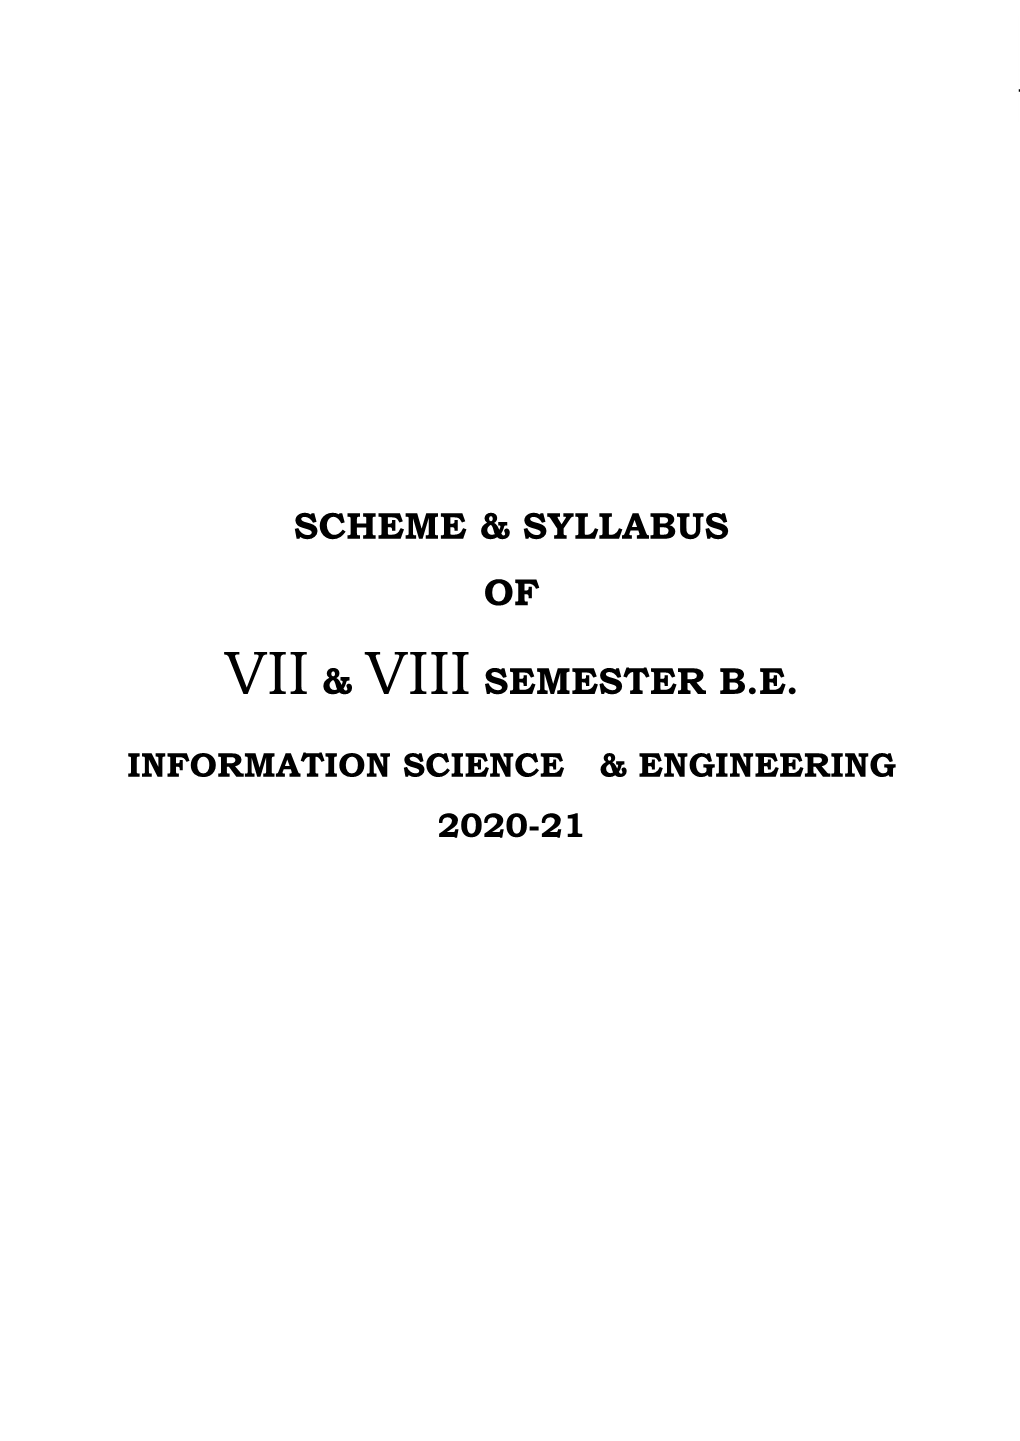 VII Sem/VIII Sem Scheme & Syllabus